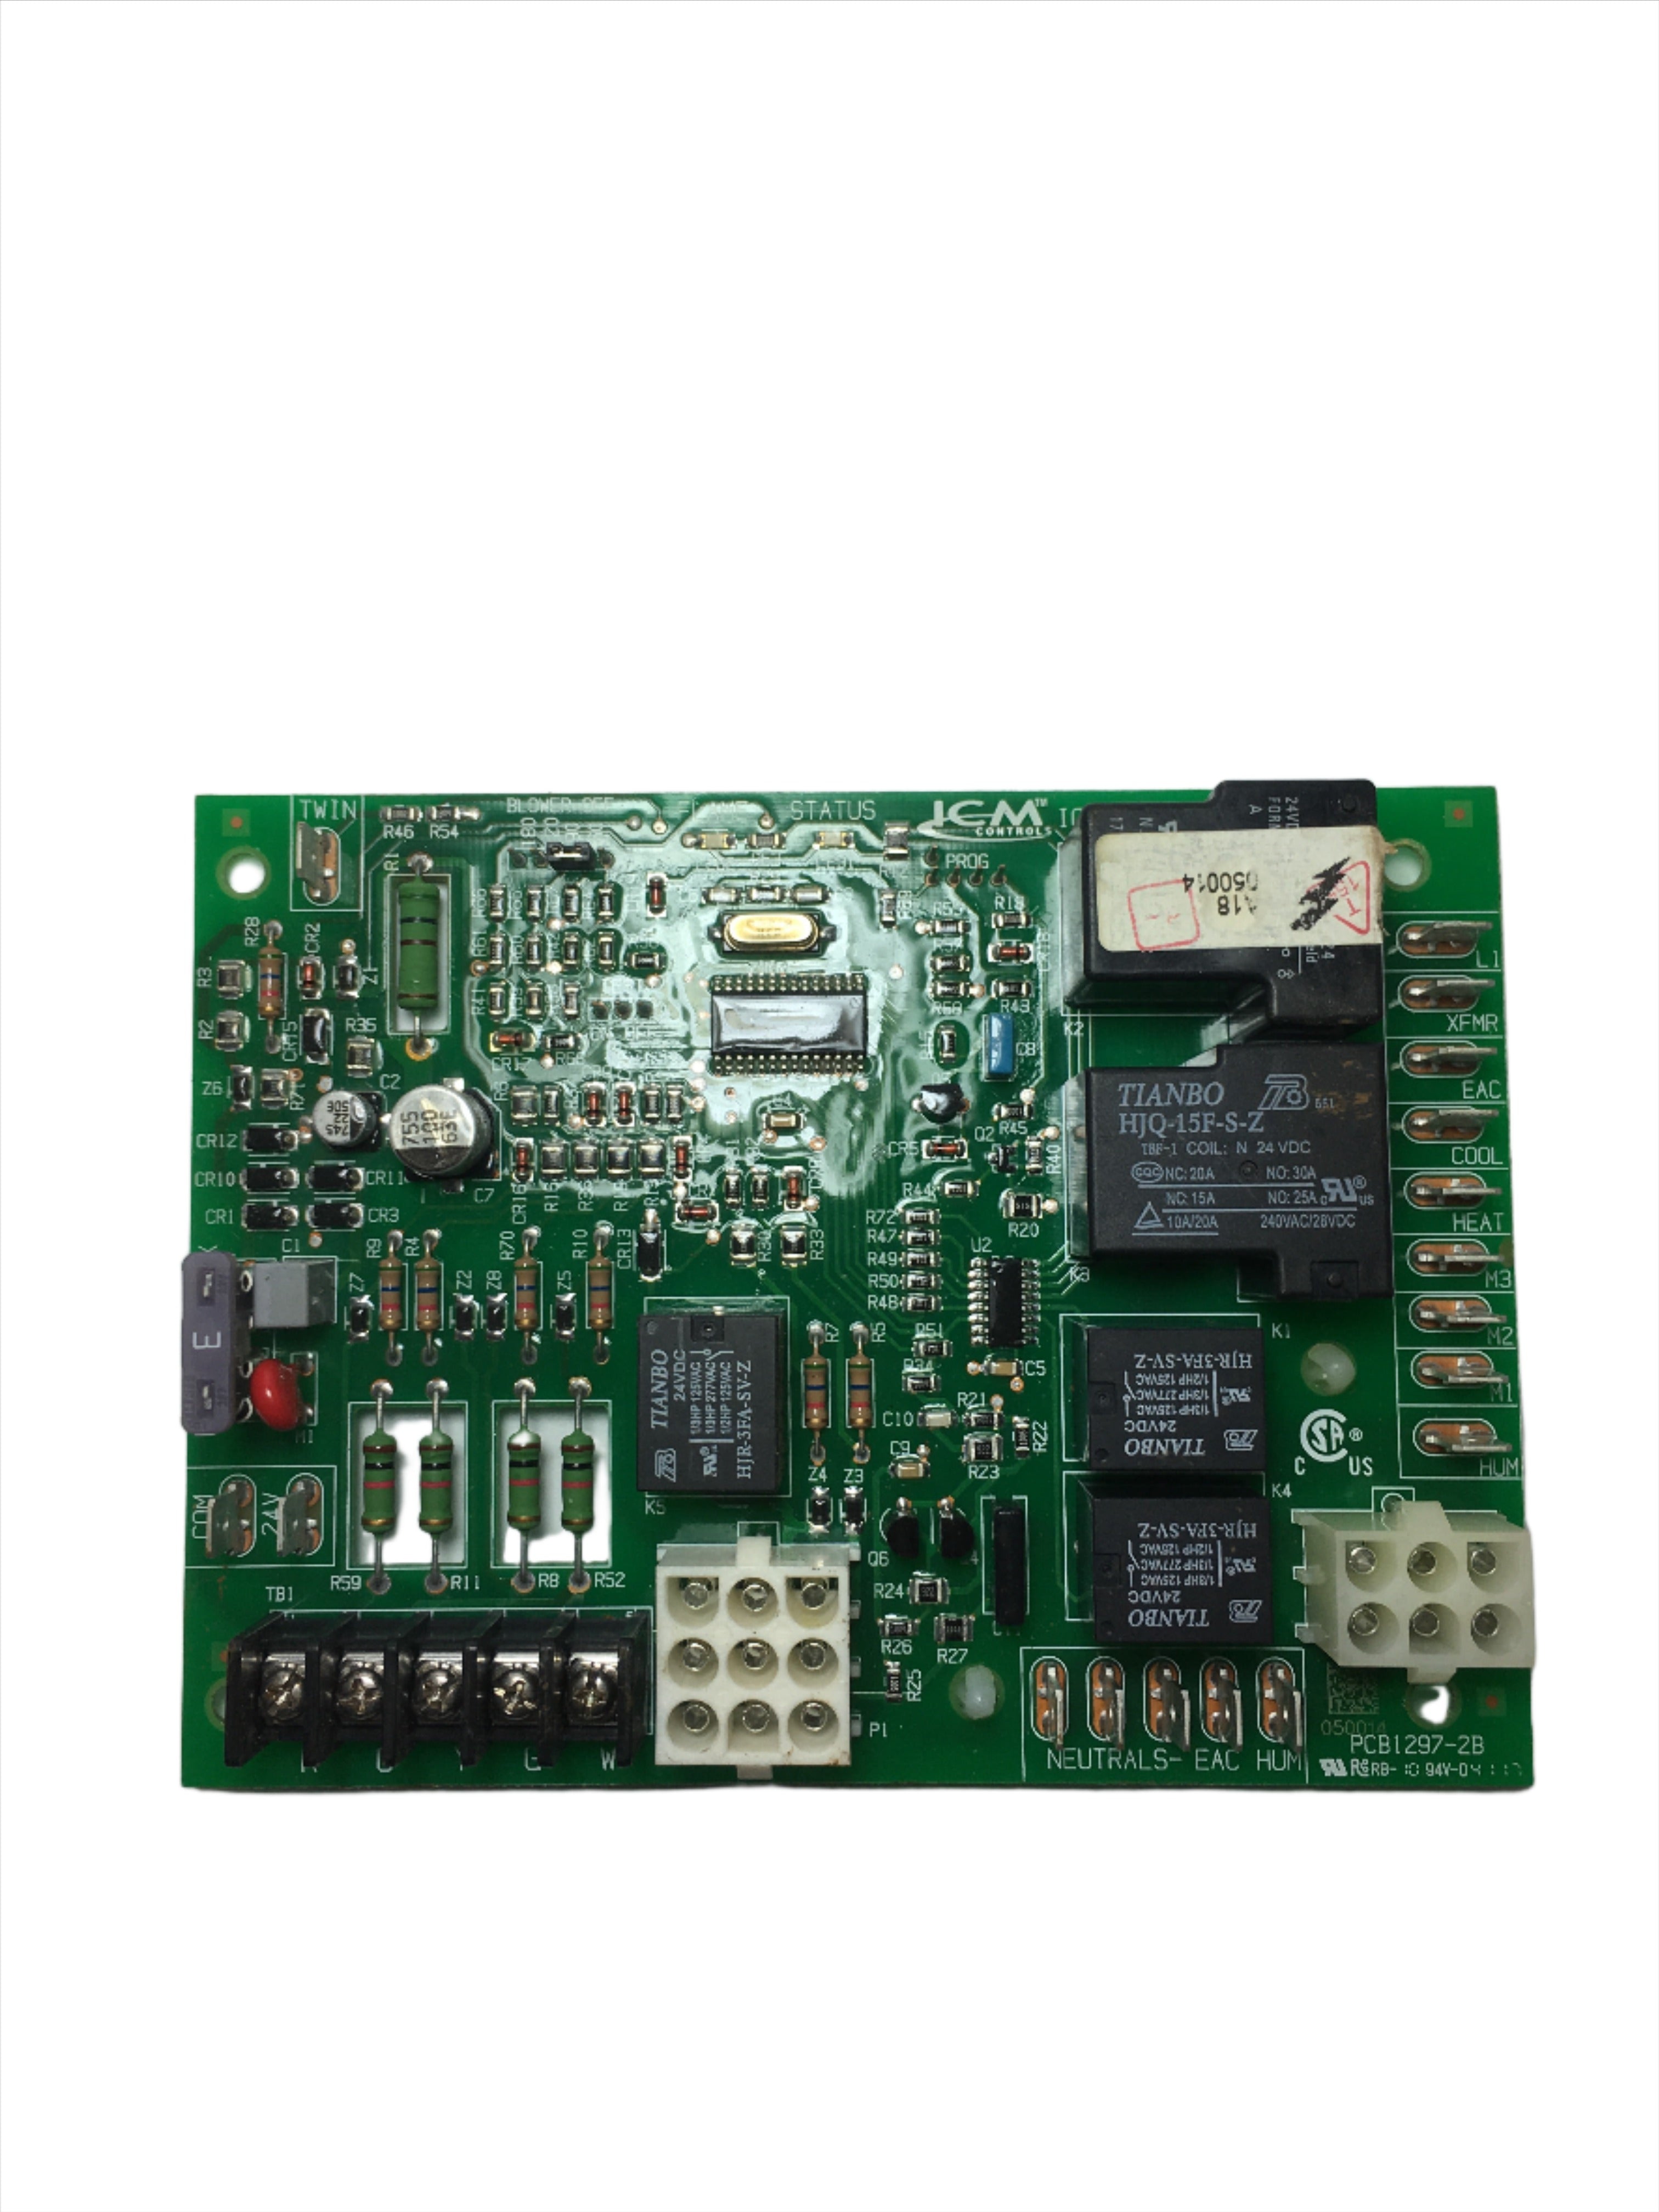 ICM ICM2805A Furnace Control Boards